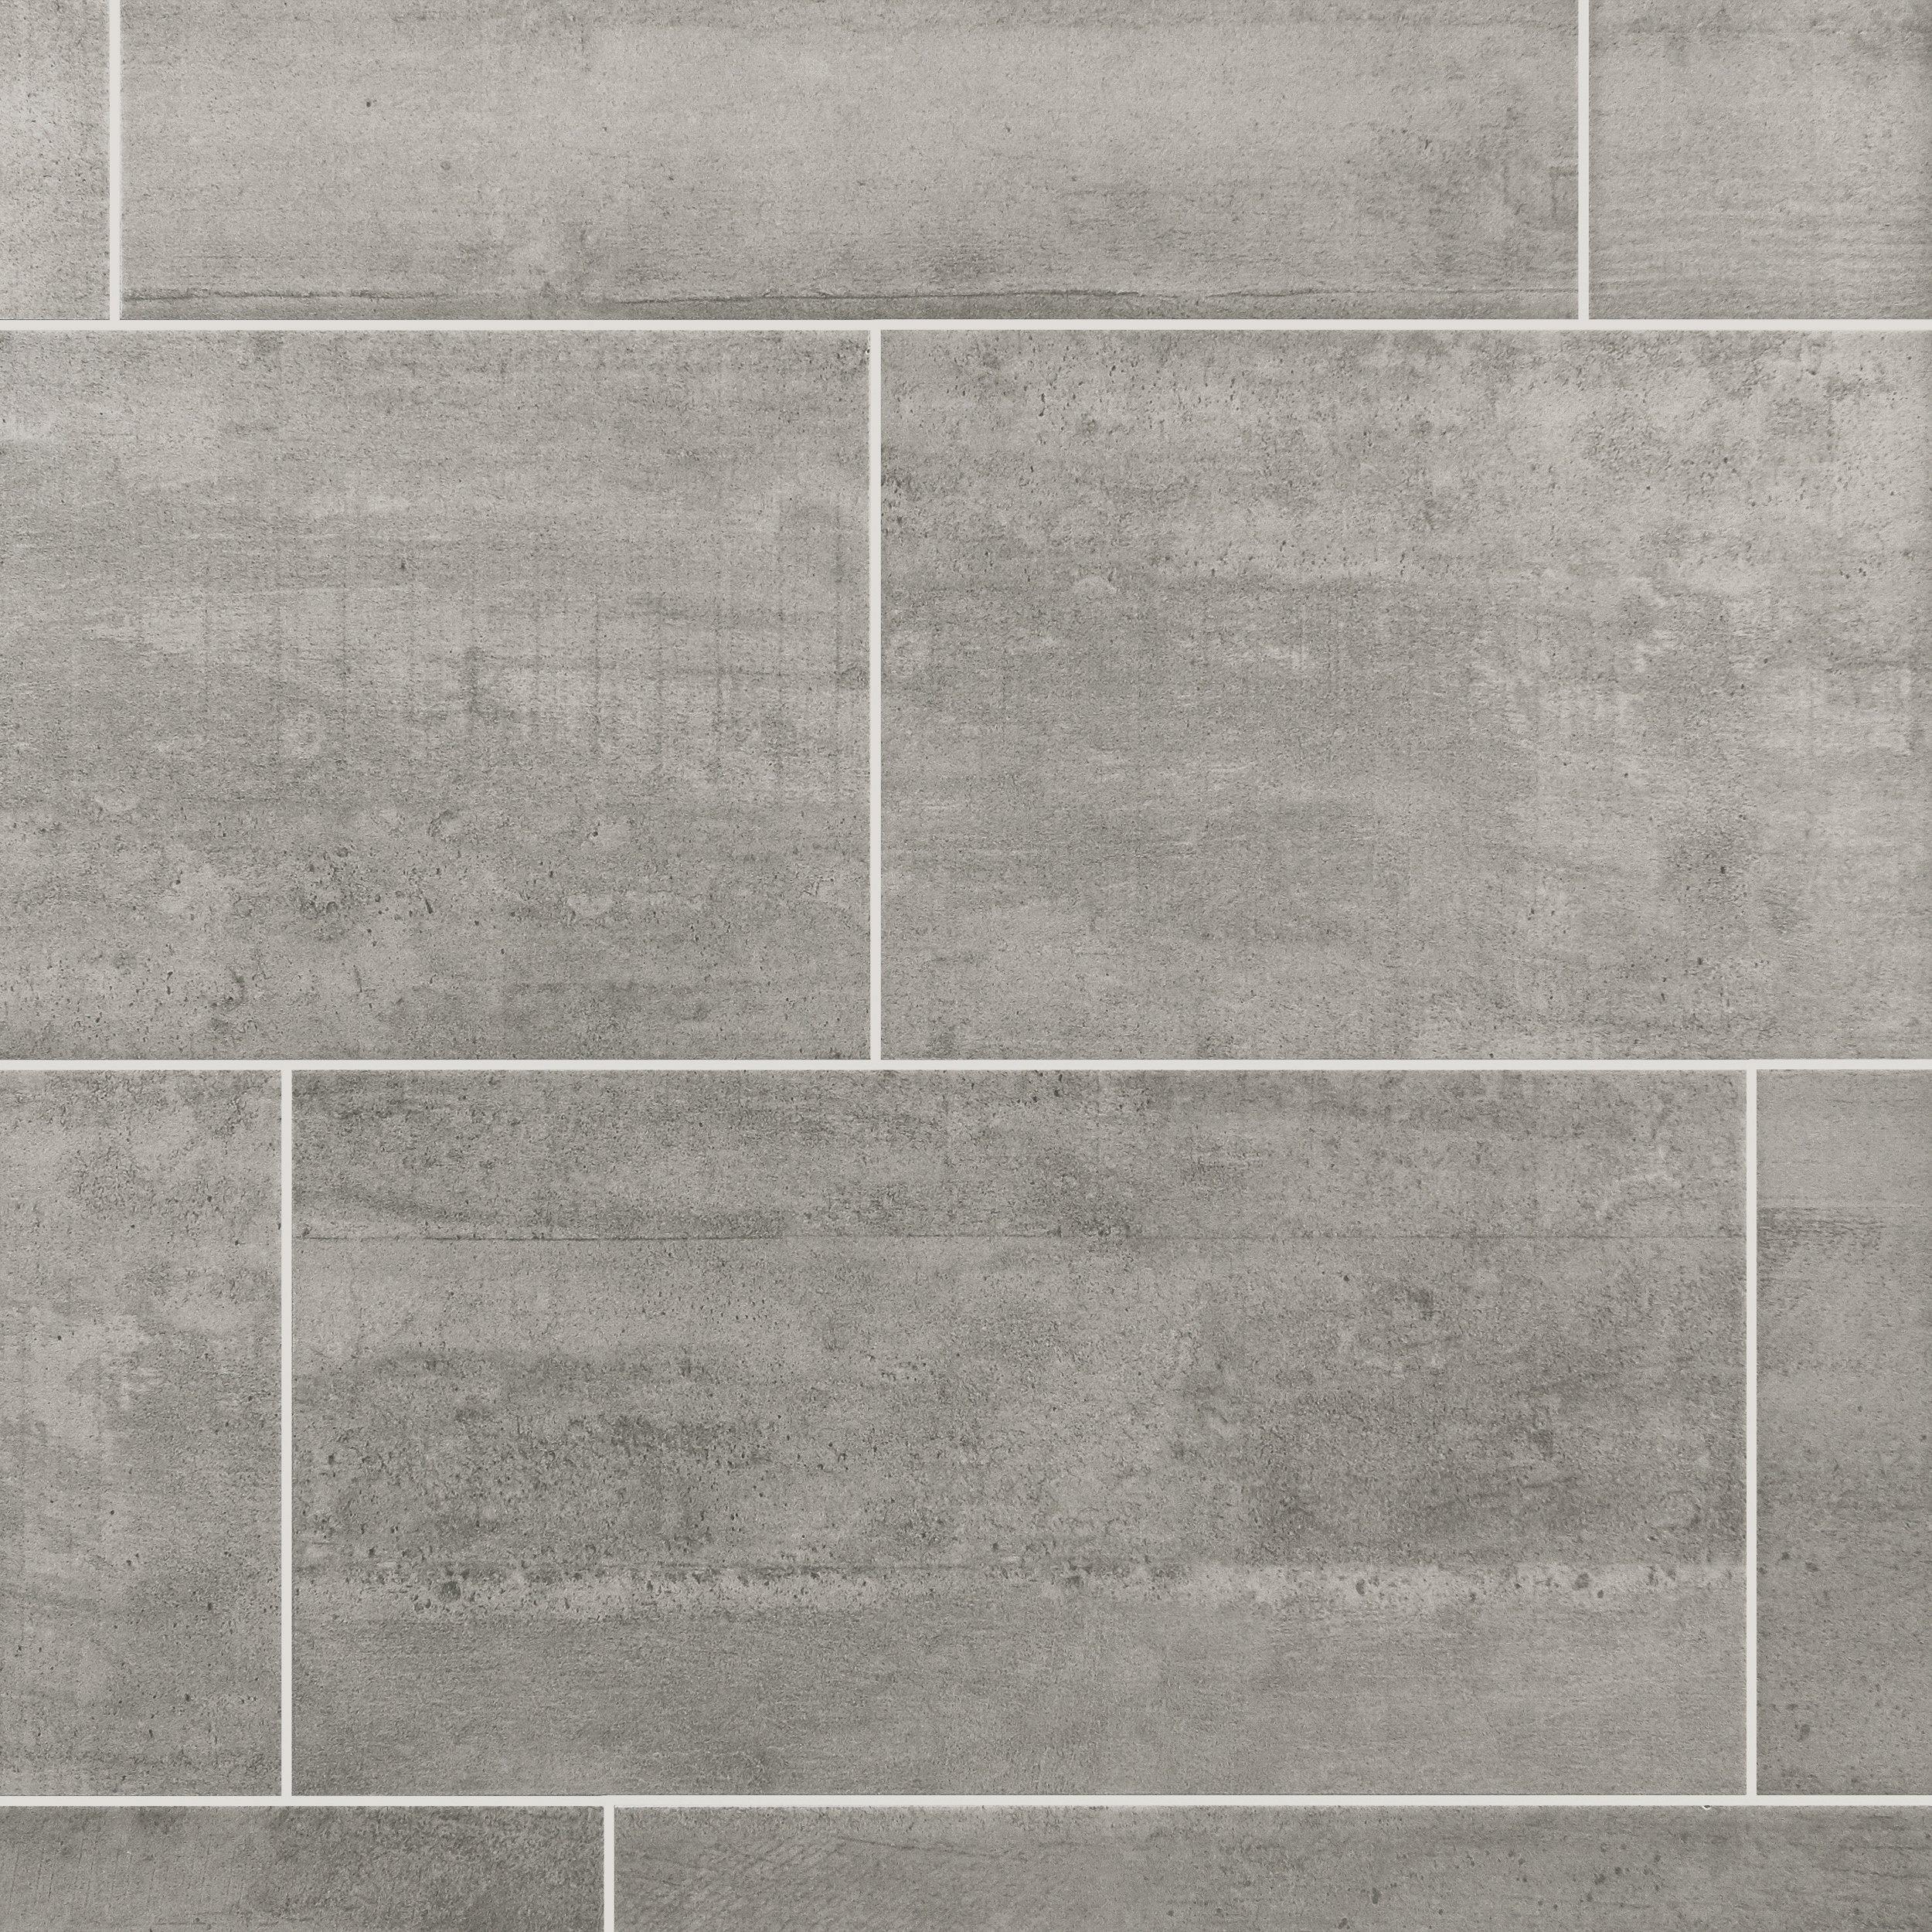 Concrete Gray Ceramic Tile Floor And, Gray Tile Floor